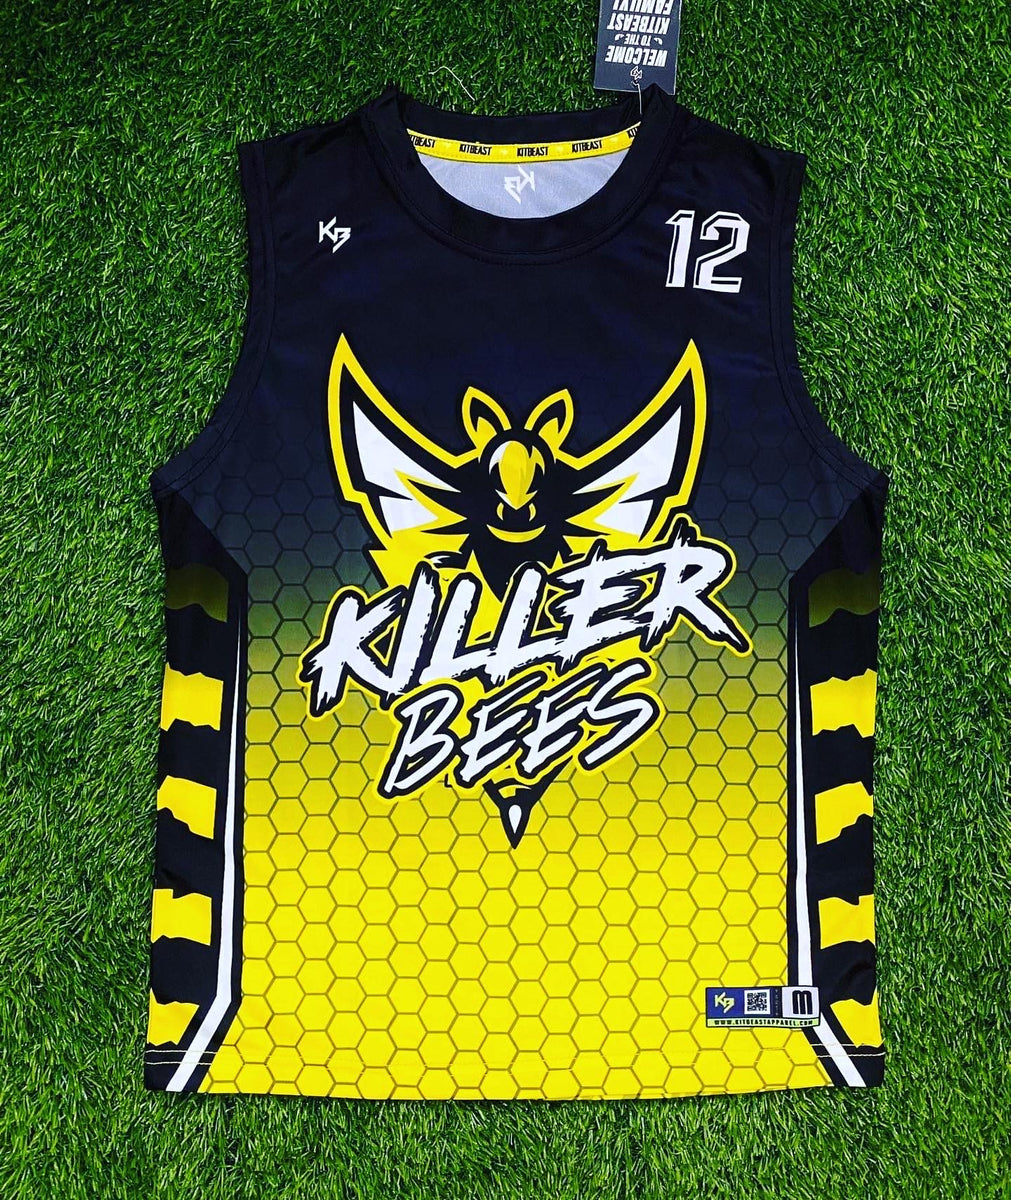 Panthers Custom Basketball Uniform – KitBeast Sports Apparel